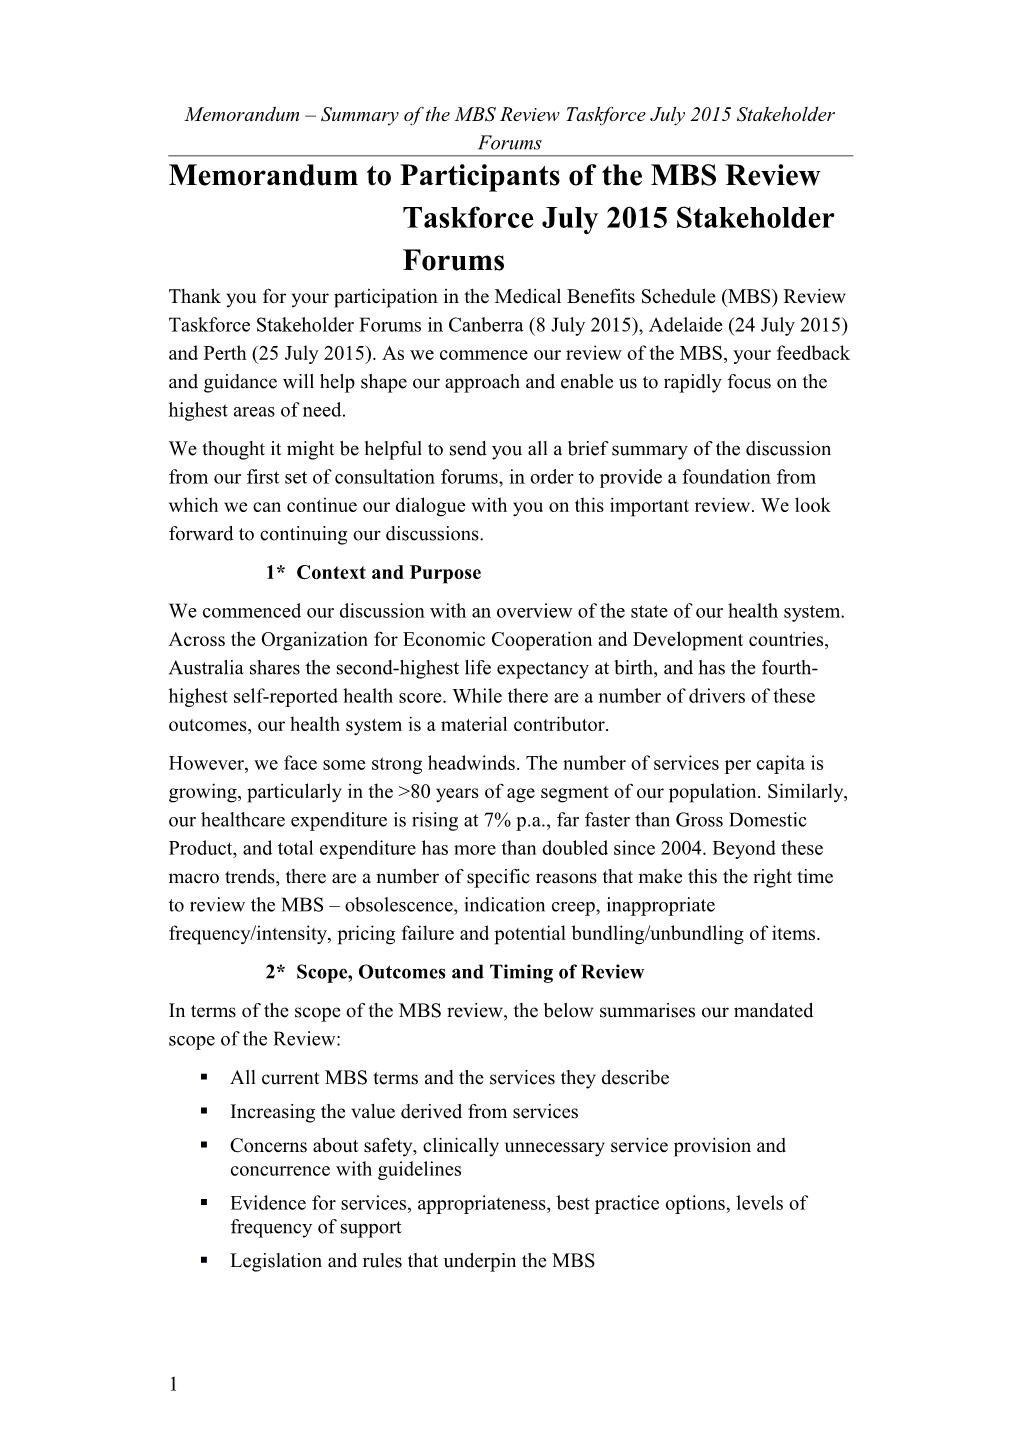 Memorandum - Summary of the MBS Review Taskforce July 2015 Stakeholder Forums